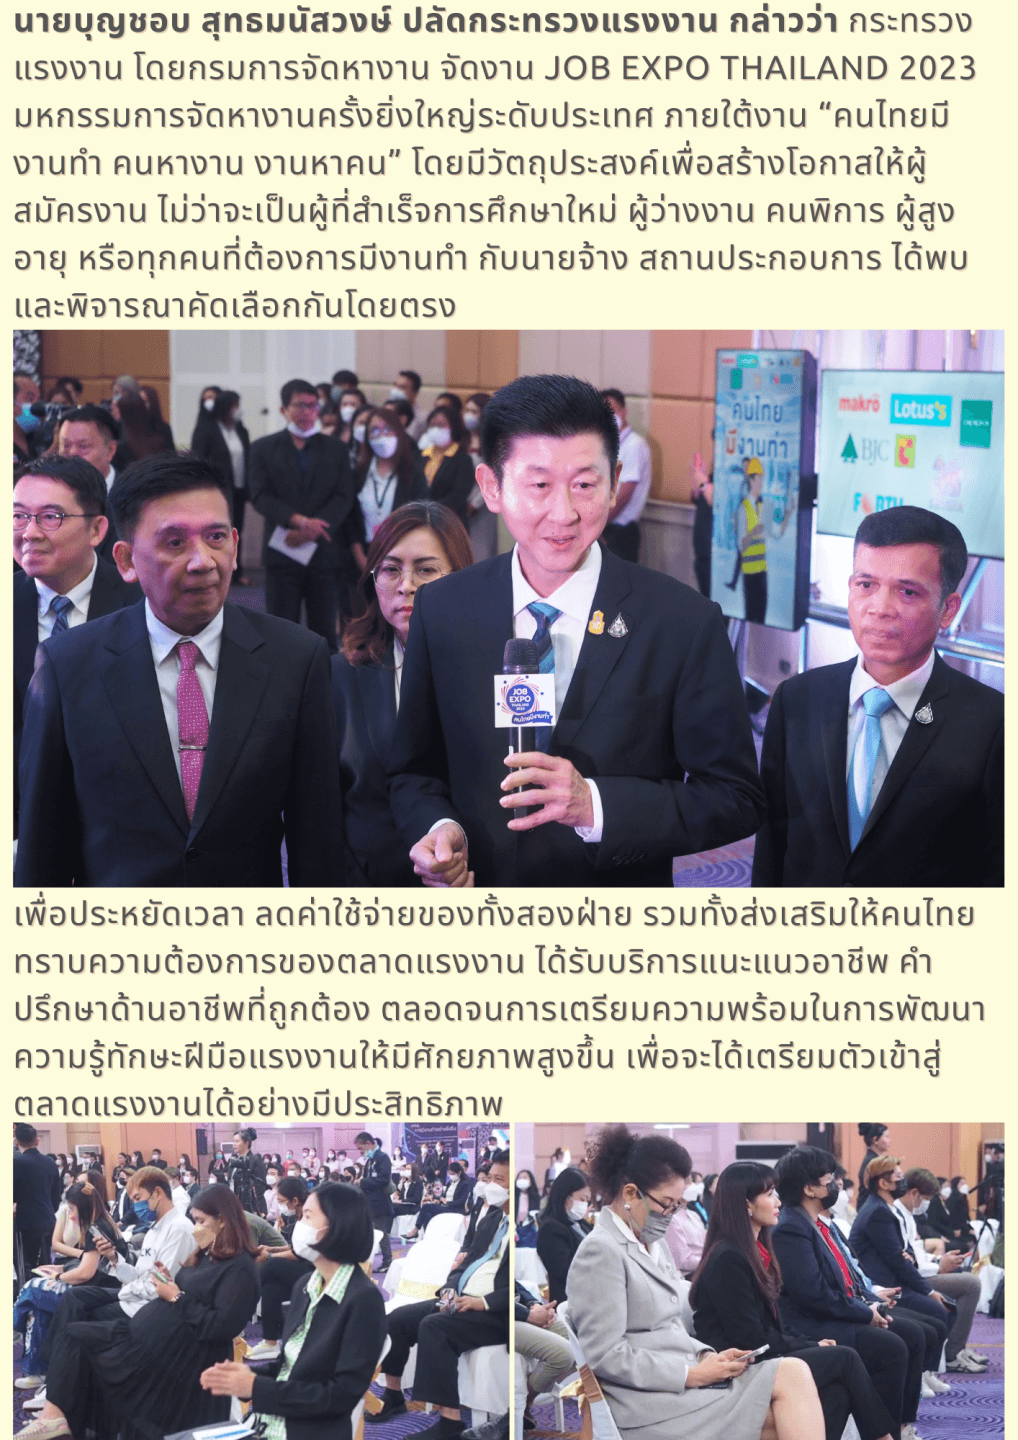 Job Expo Thailand 2023 ภายใต้งาน “คนไทยมีงานทำ คนหางาน งานหาคน” 